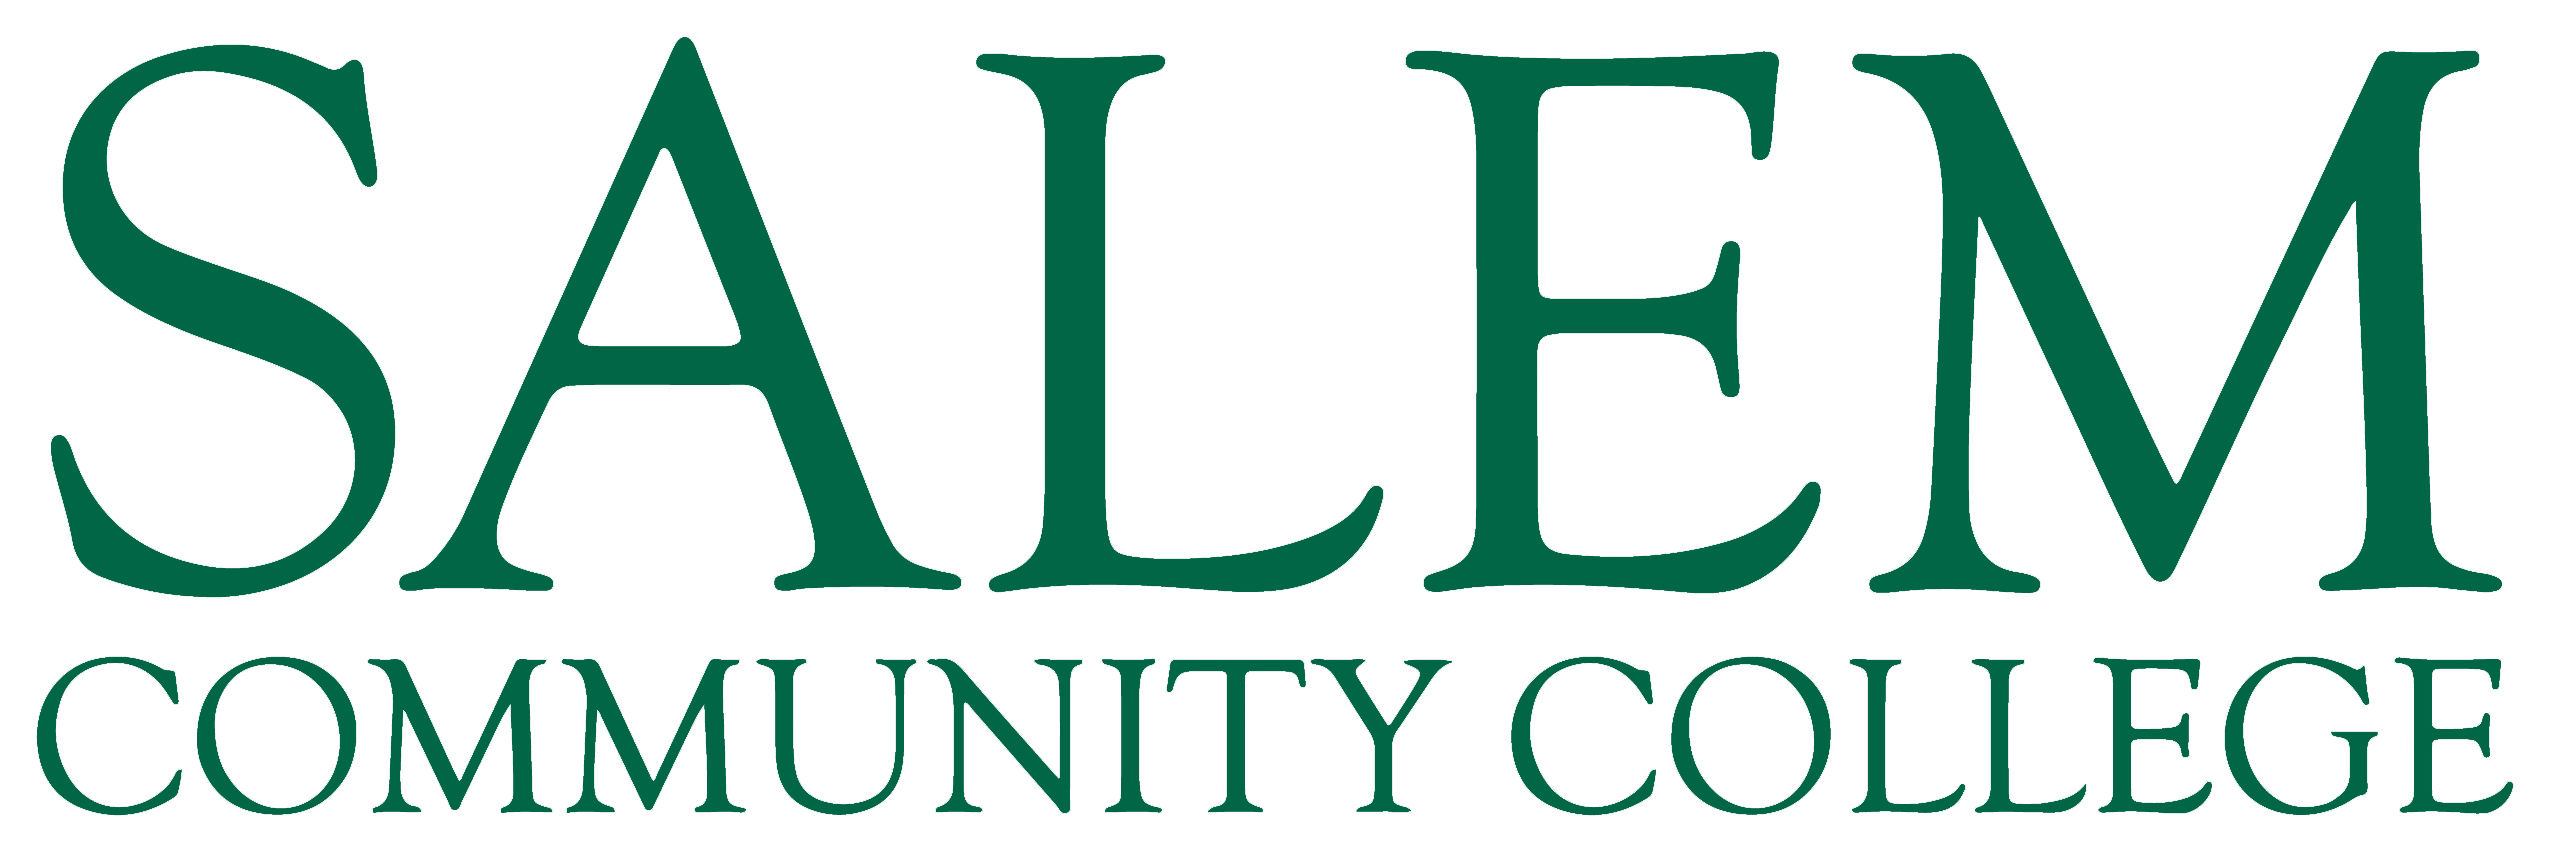 Salem Community College Logo